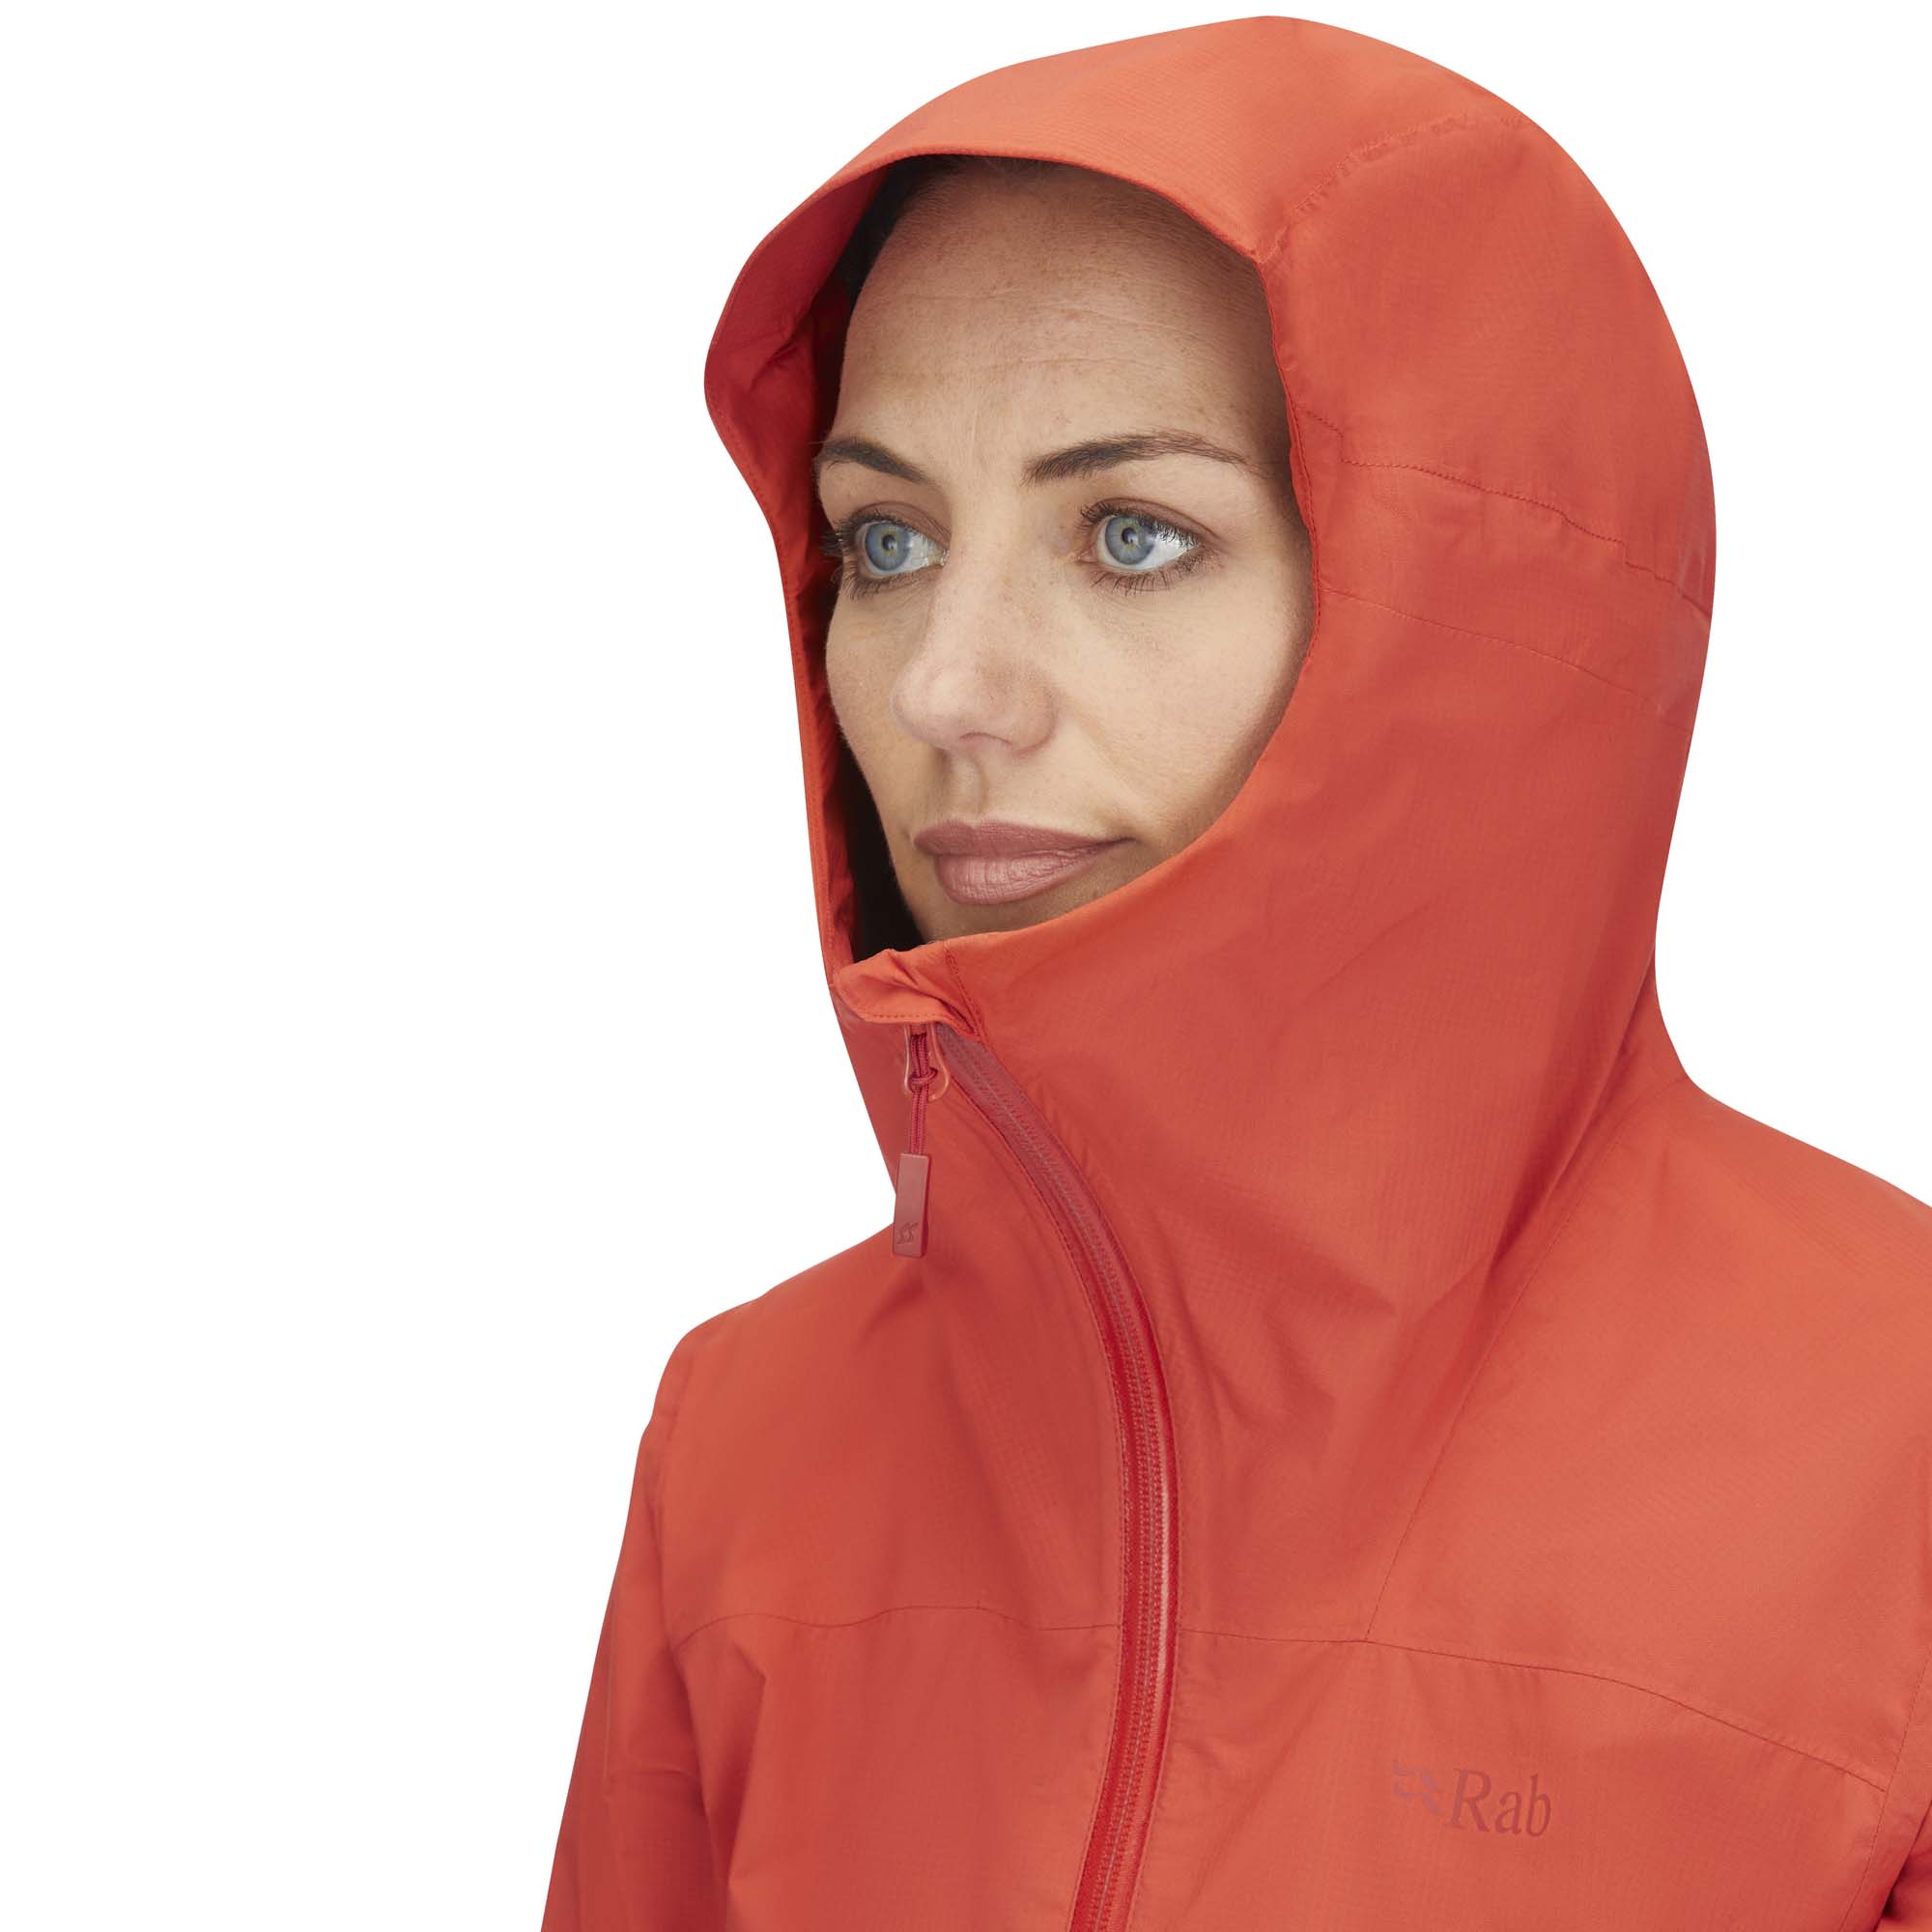 Rab Downpour Light Women's Waterproof Jacket